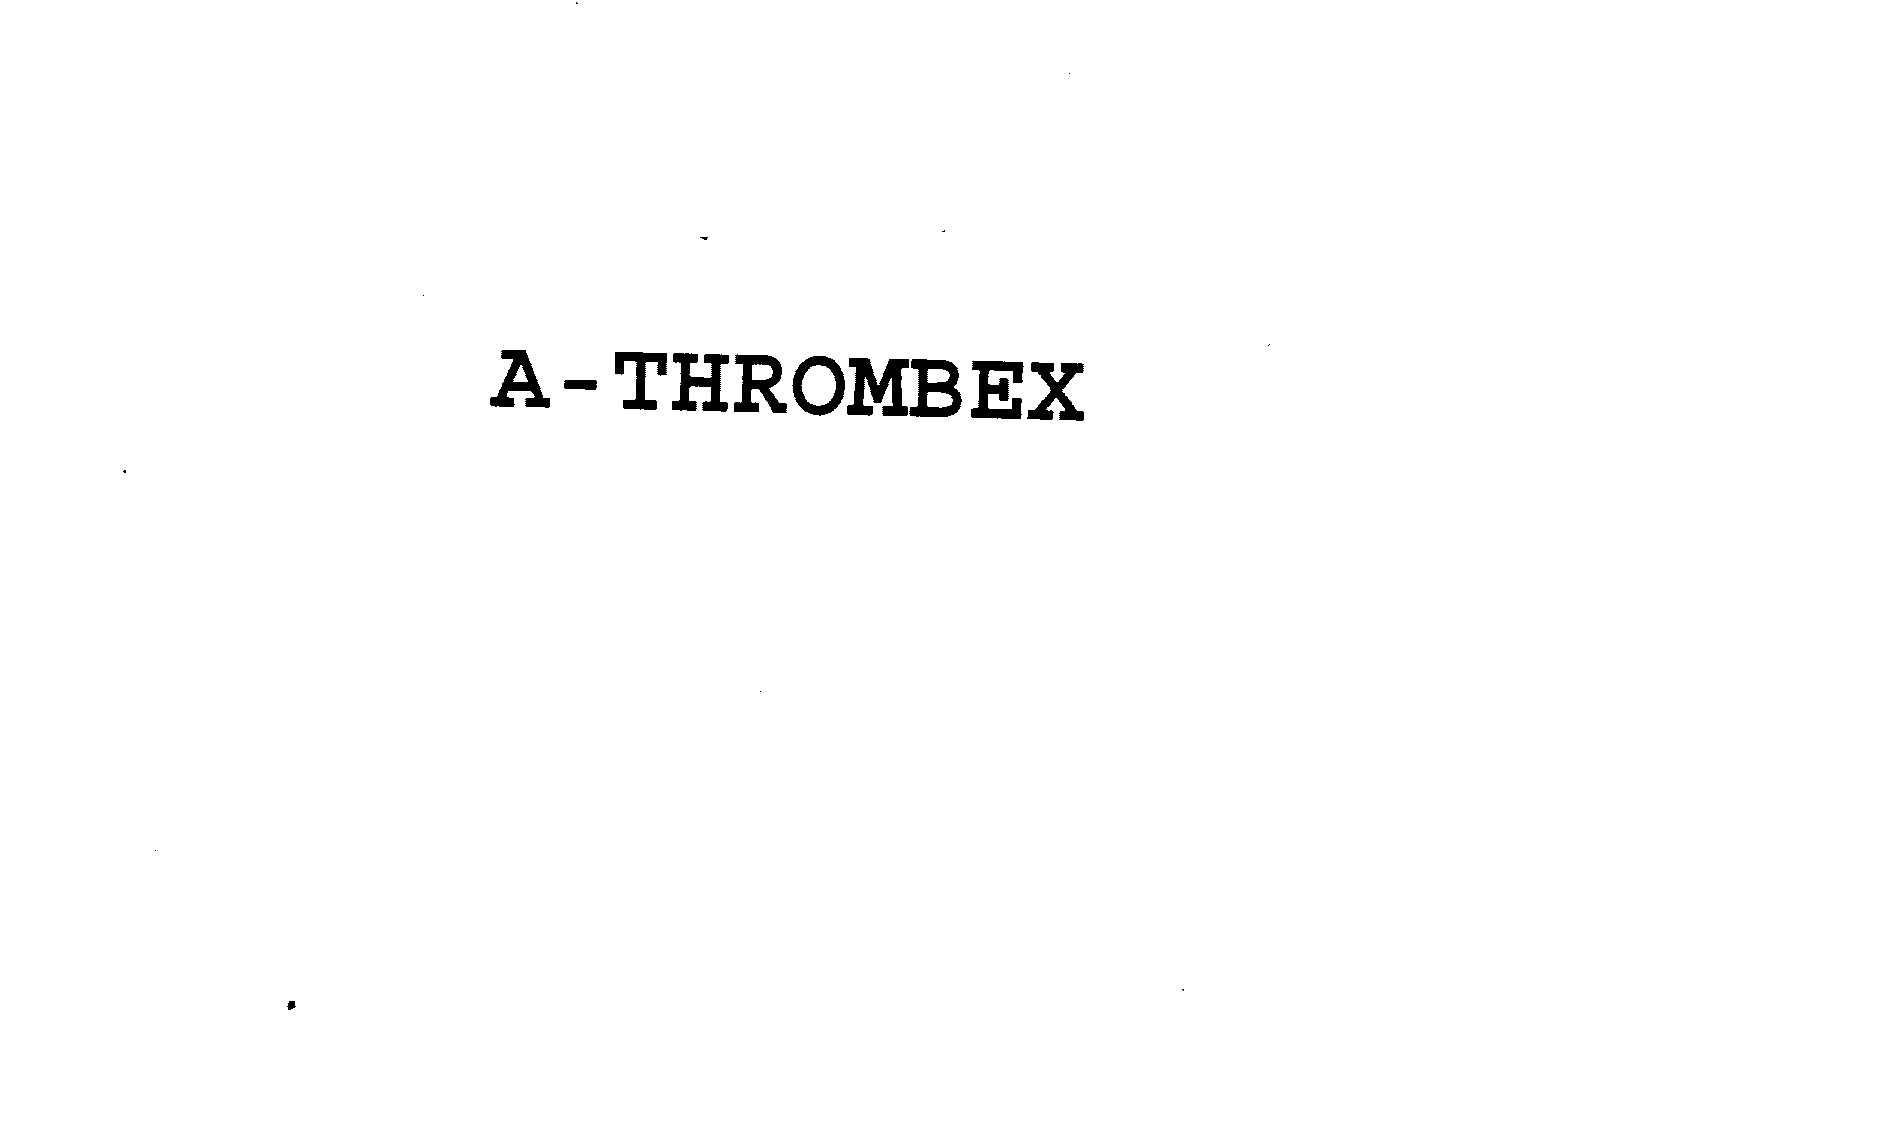  A-THROMBEX